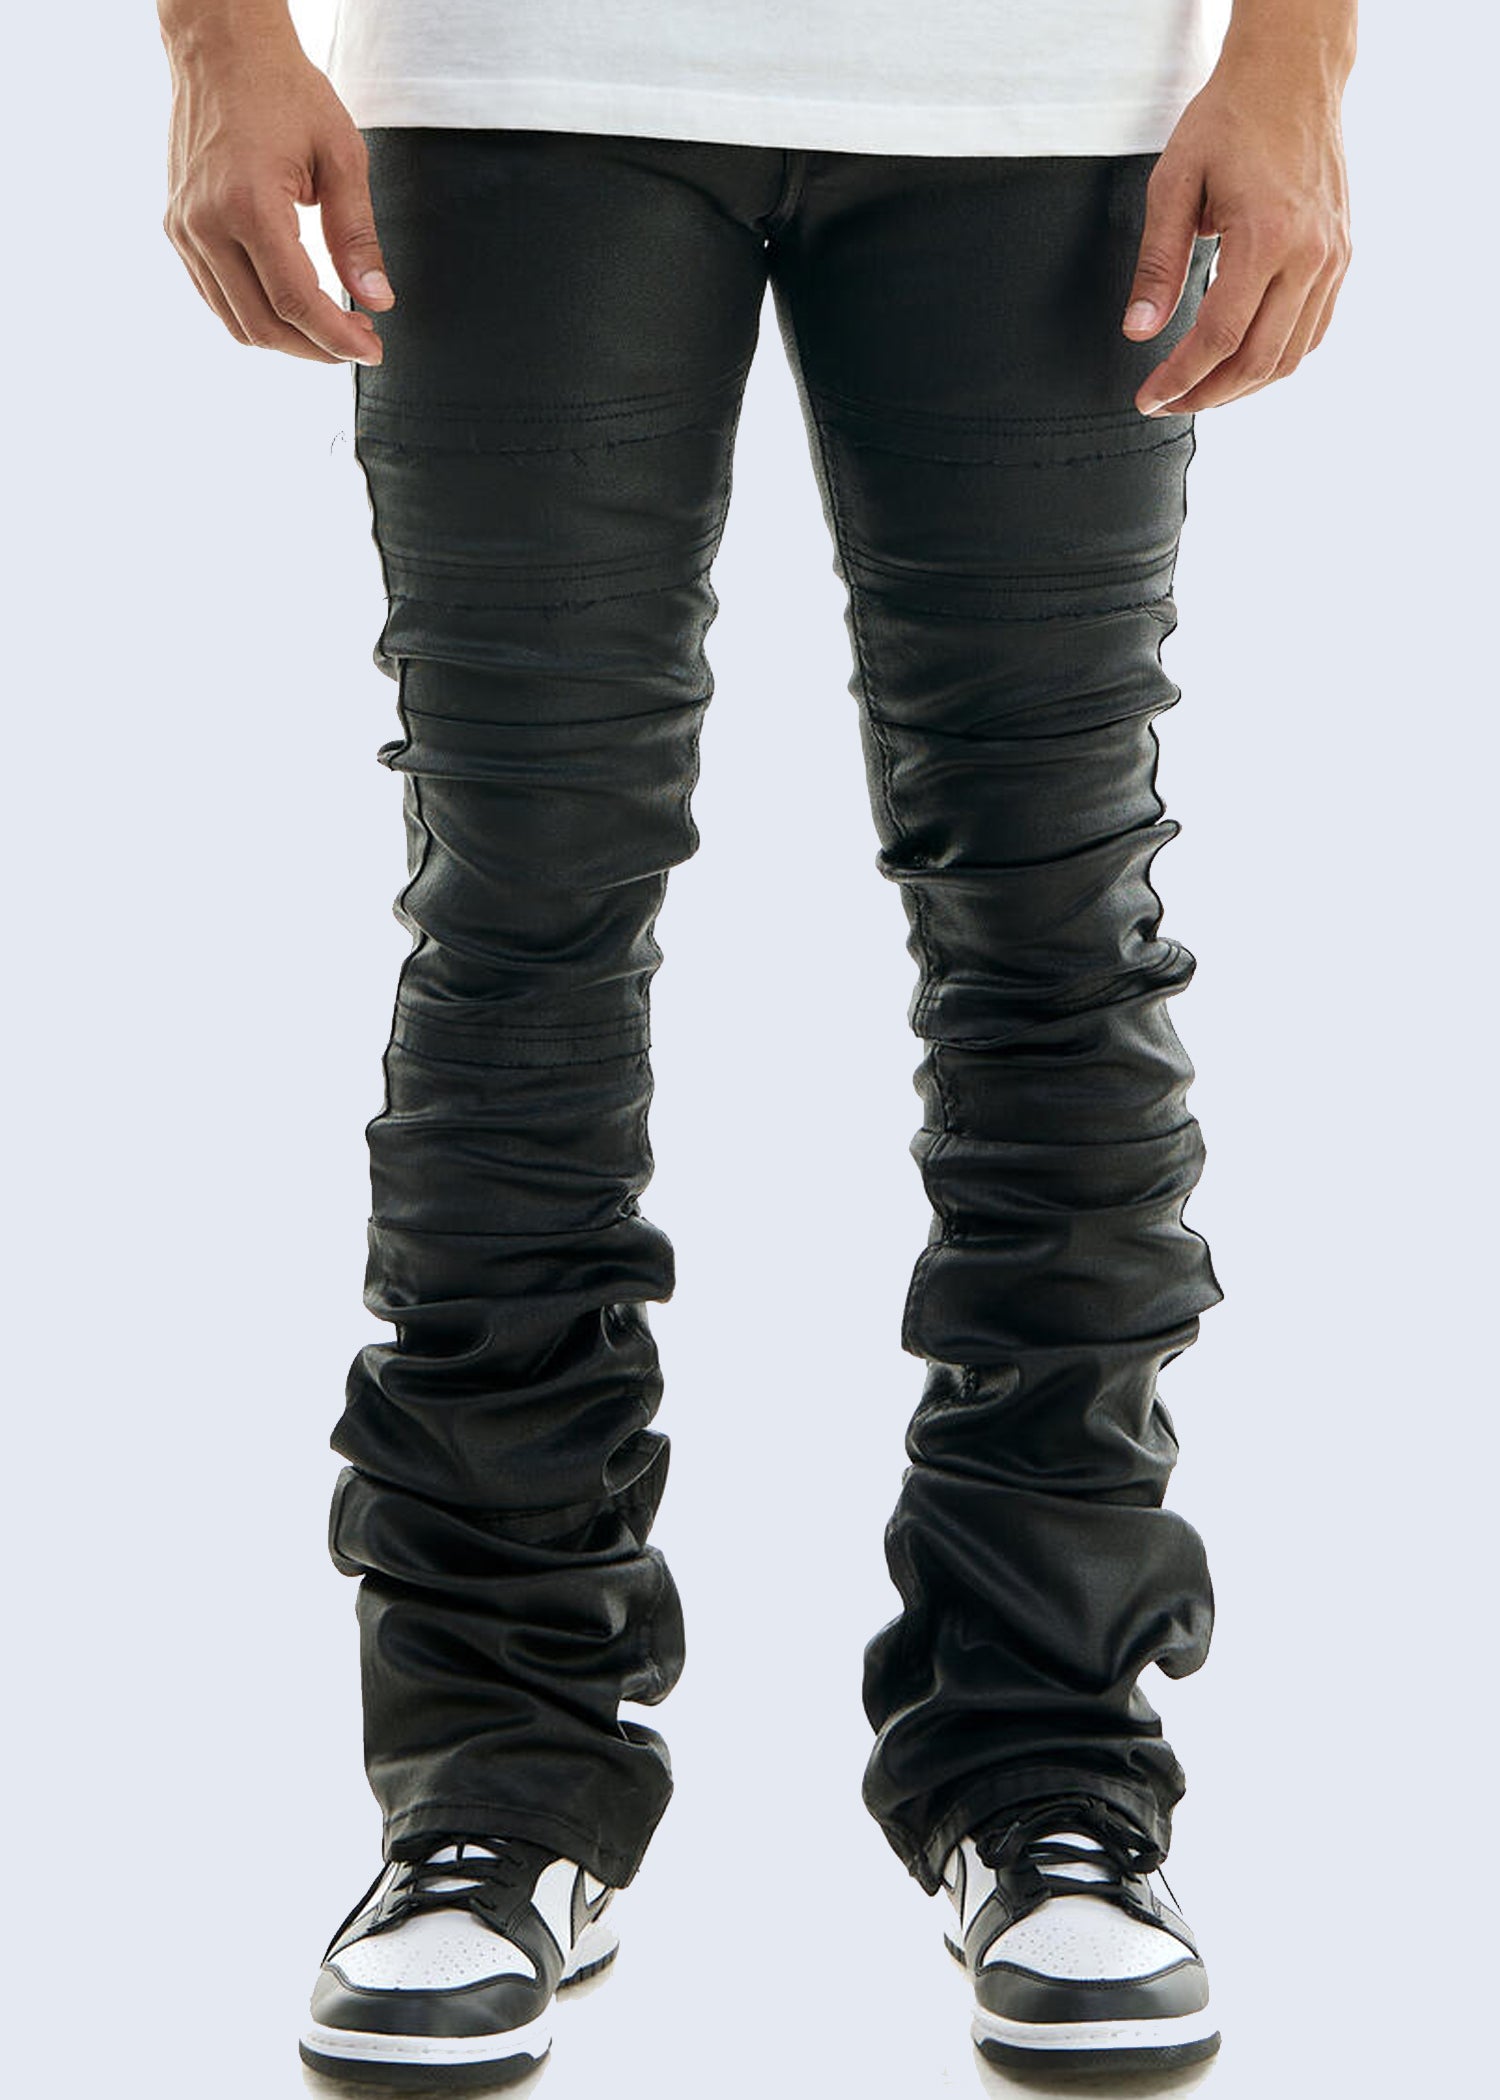 Rockstar Super Stacked Jeans - 95denim